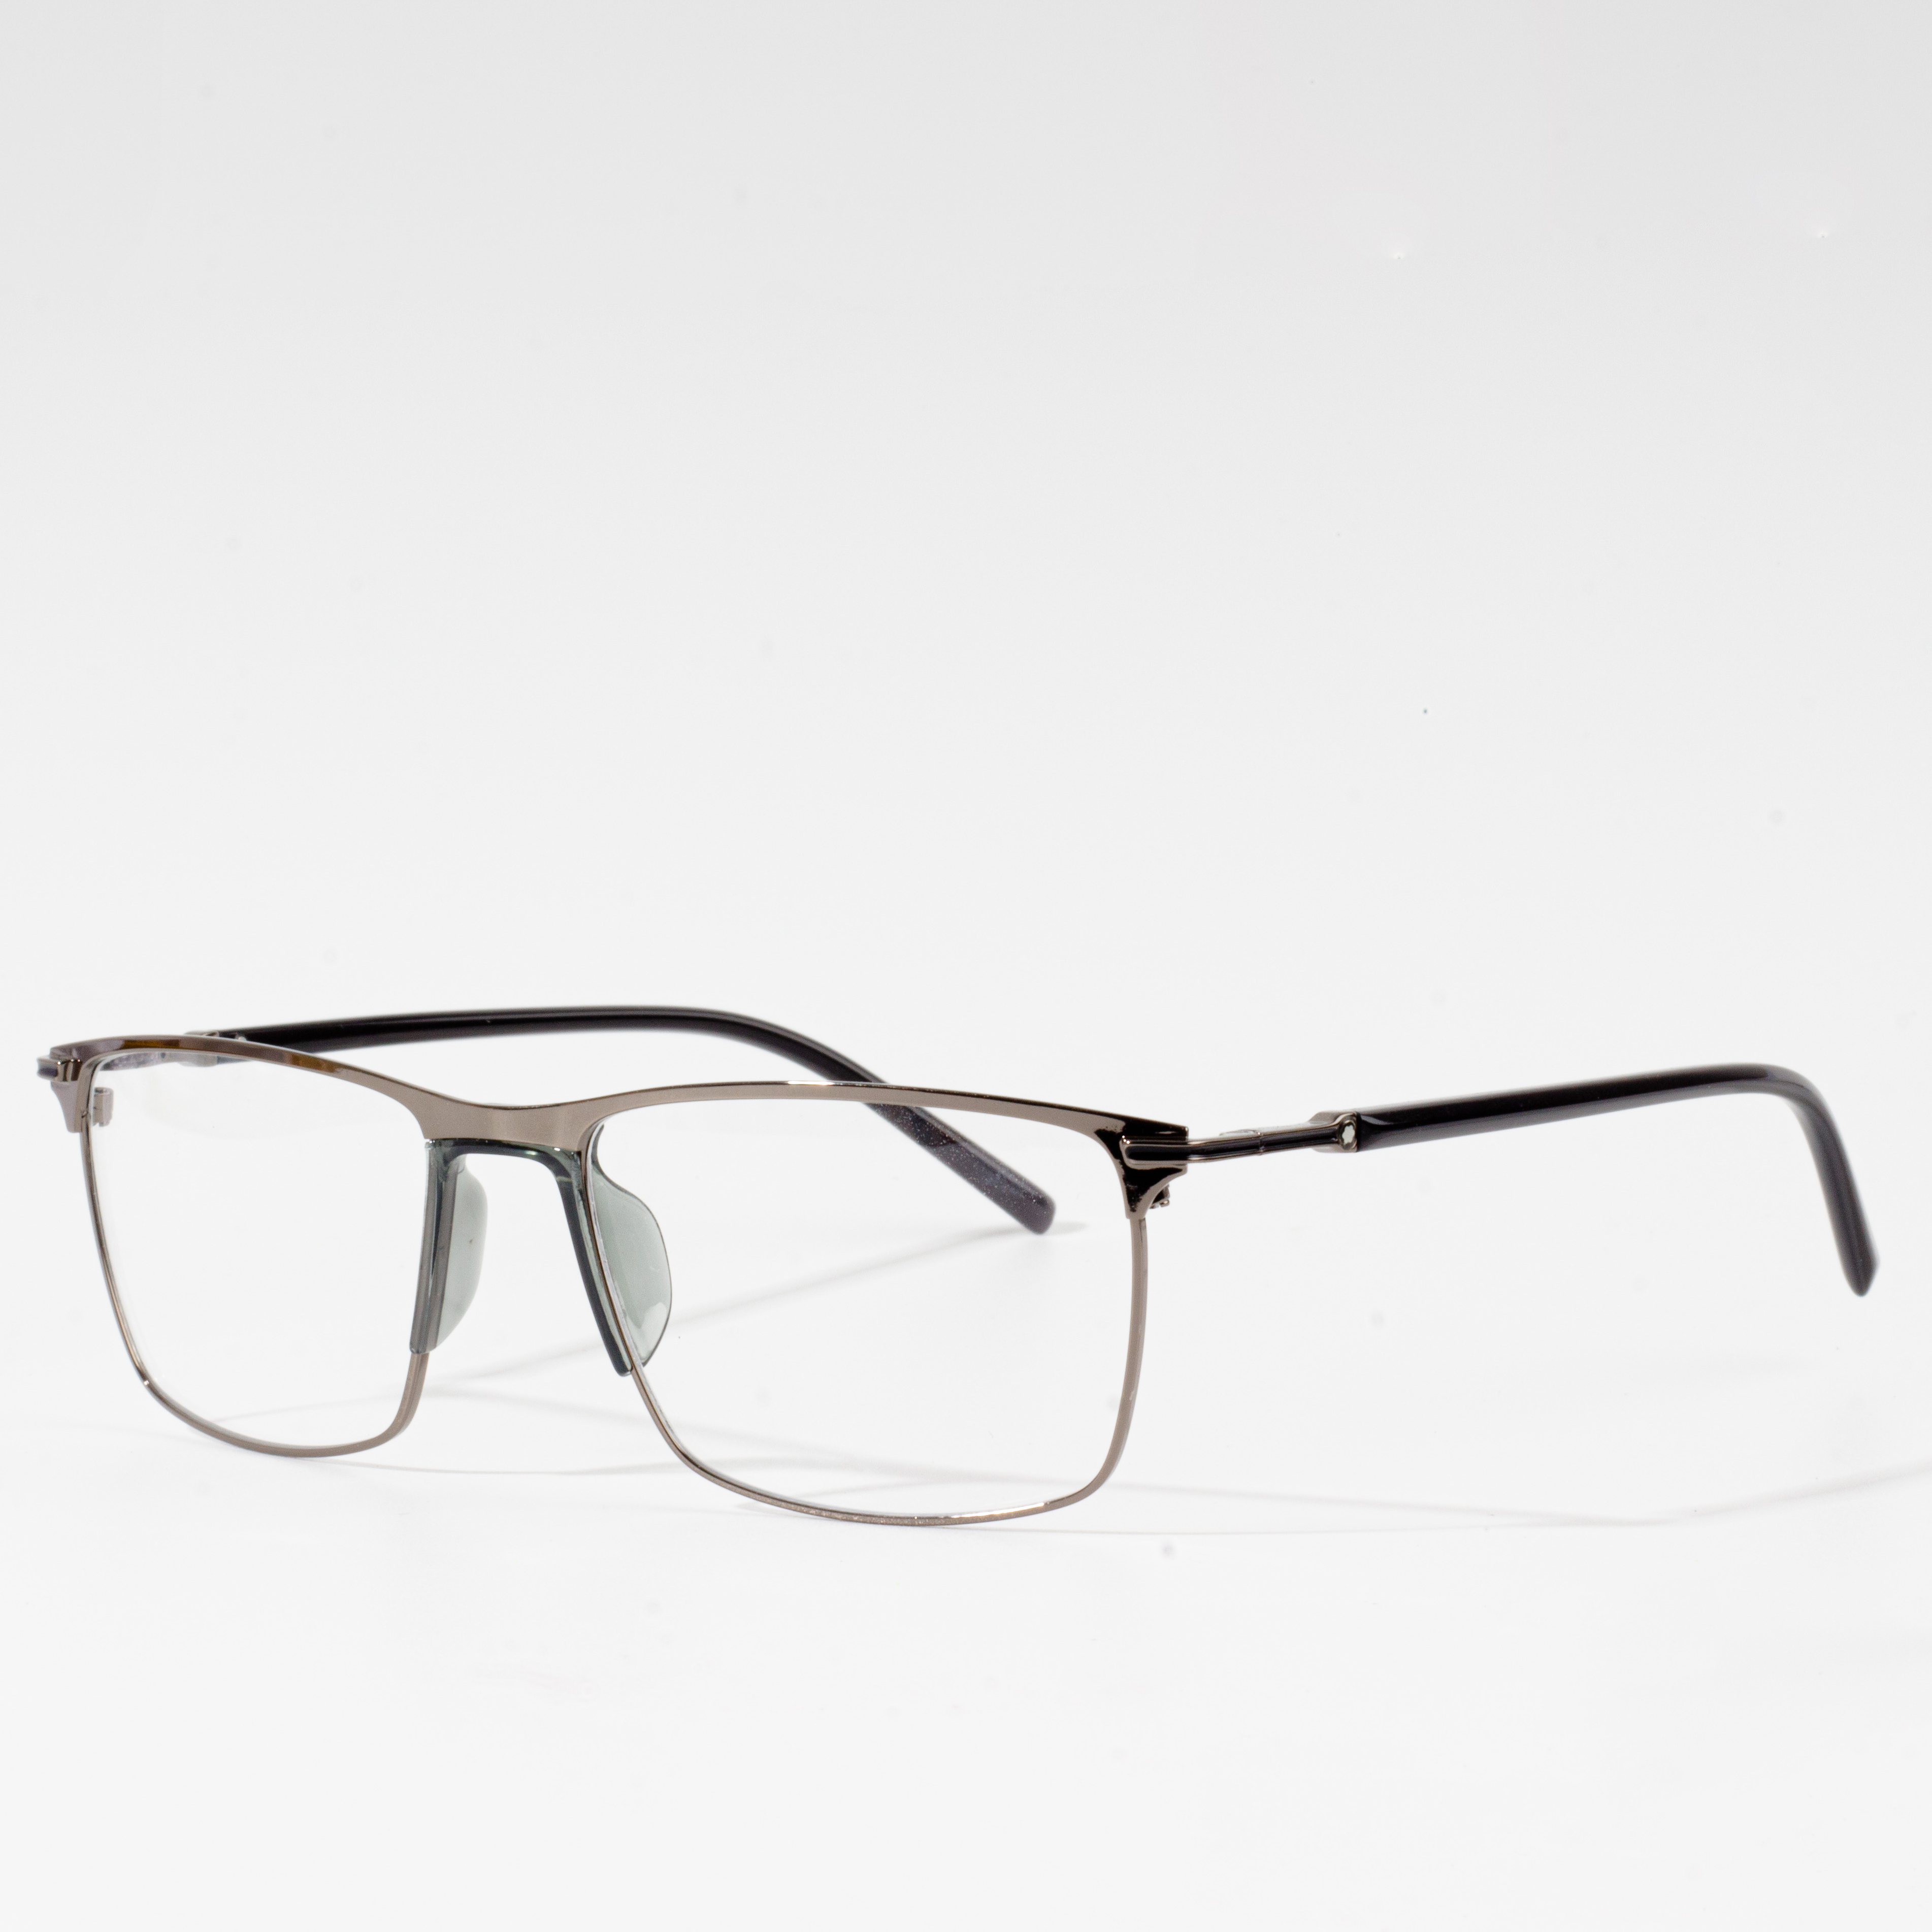 Optical eyewear frames lehilahy